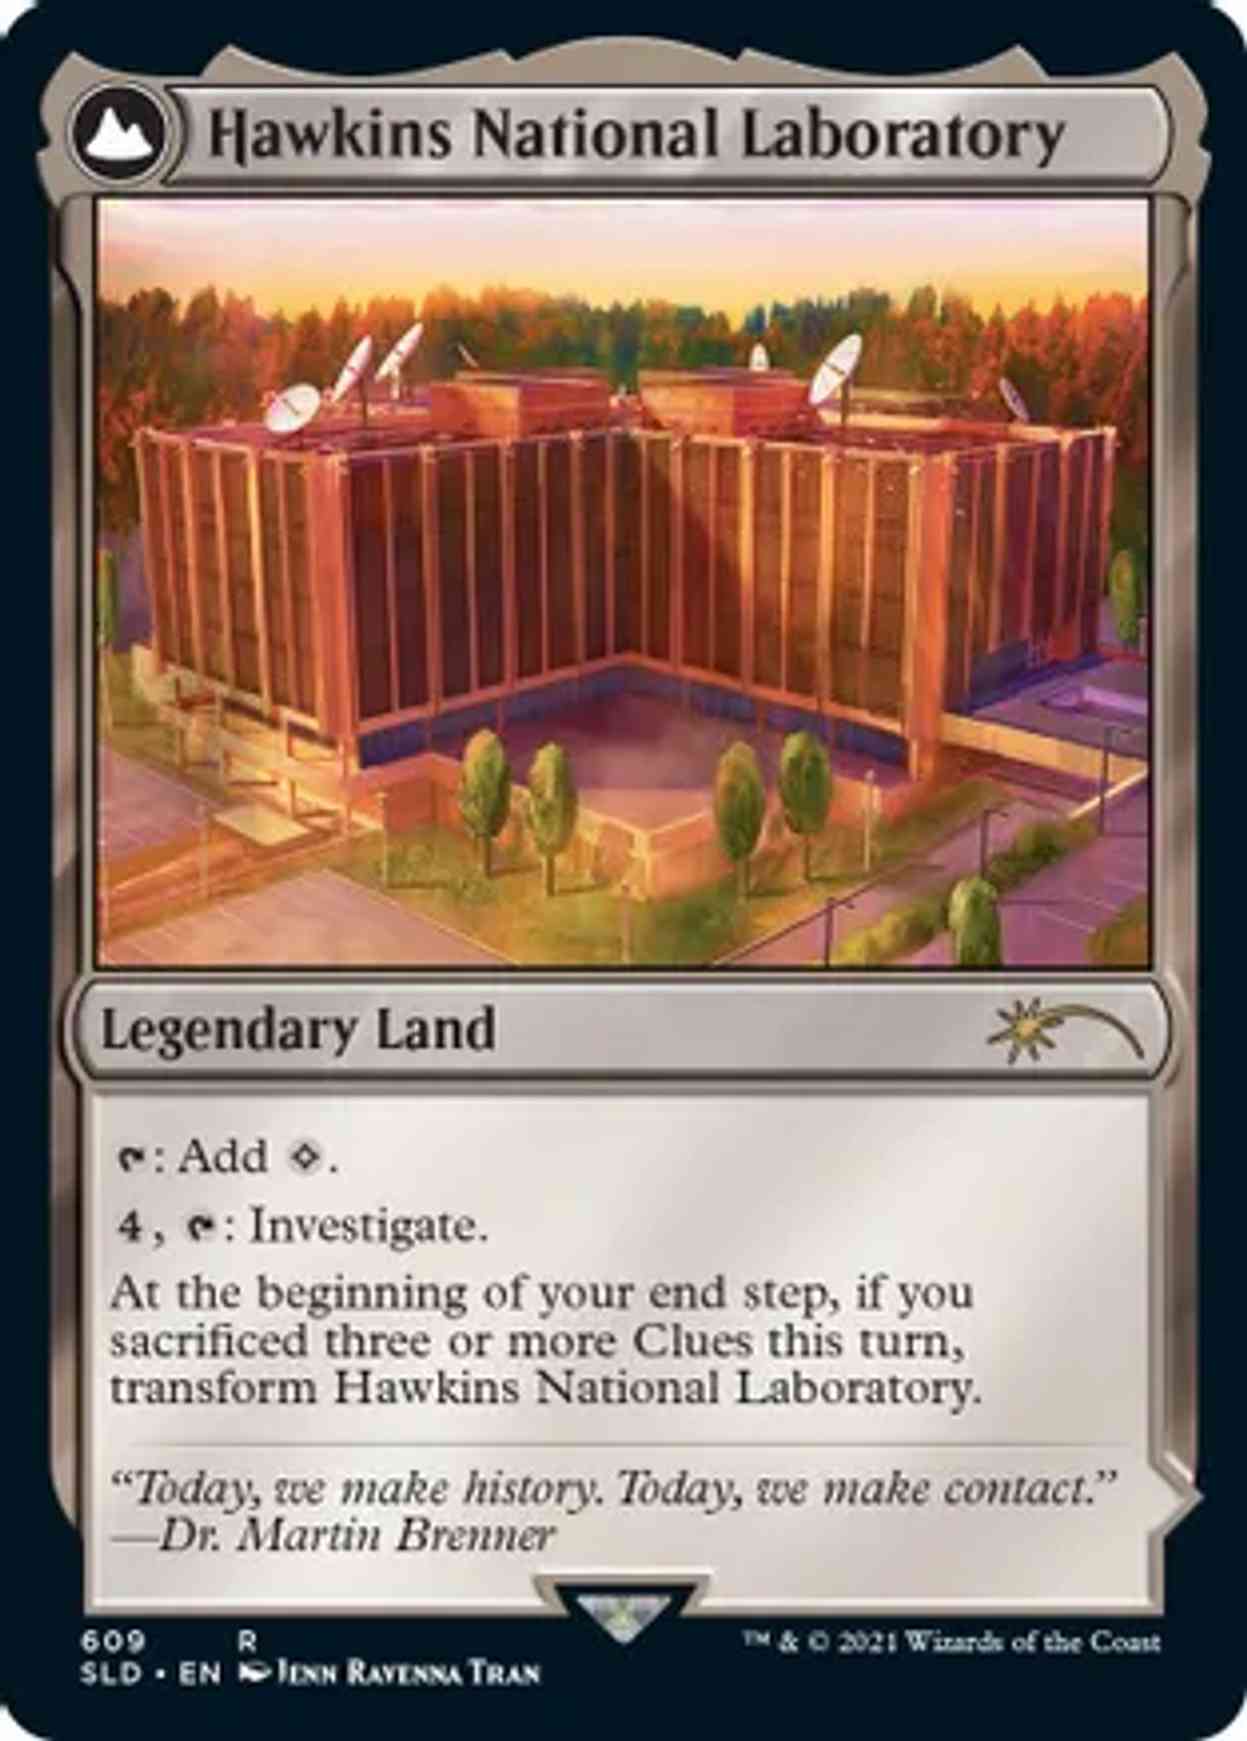 Hawkins National Laboratory magic card front